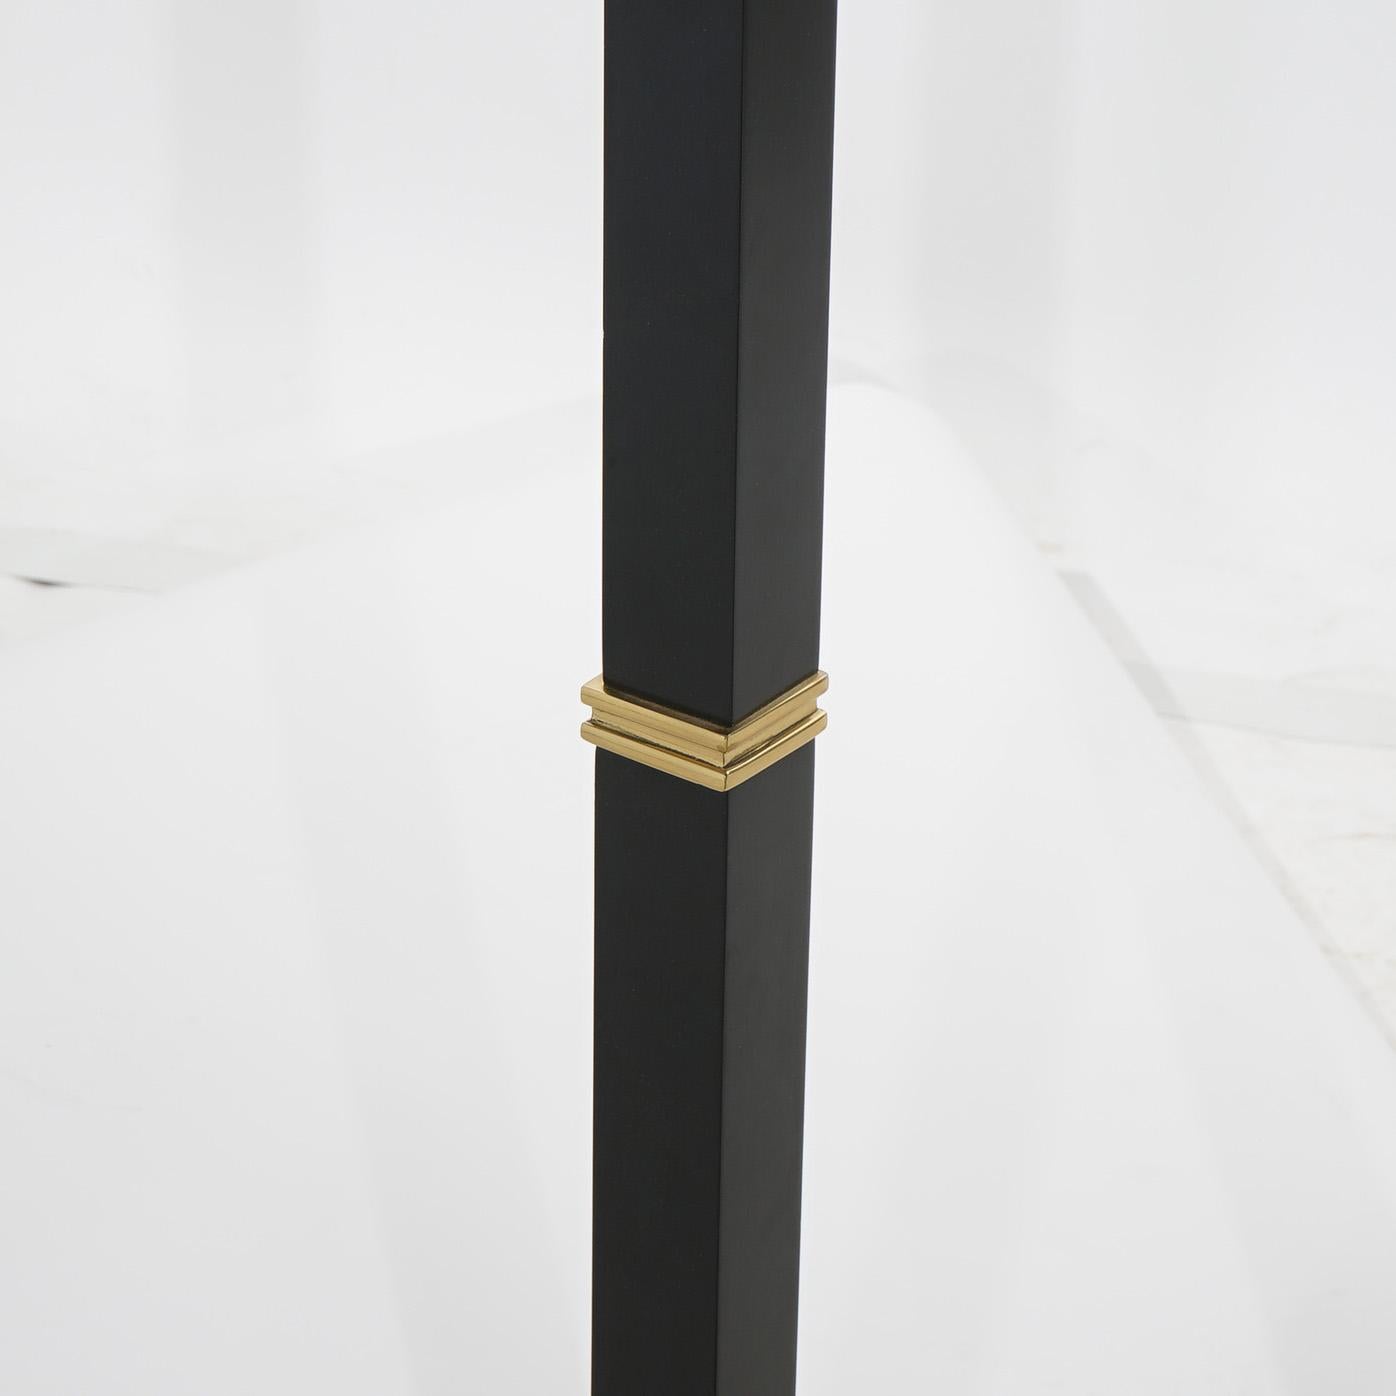 American Pair Mid Century Modern Brass & Ebonized Torchiere Floor Lamps, 20th C